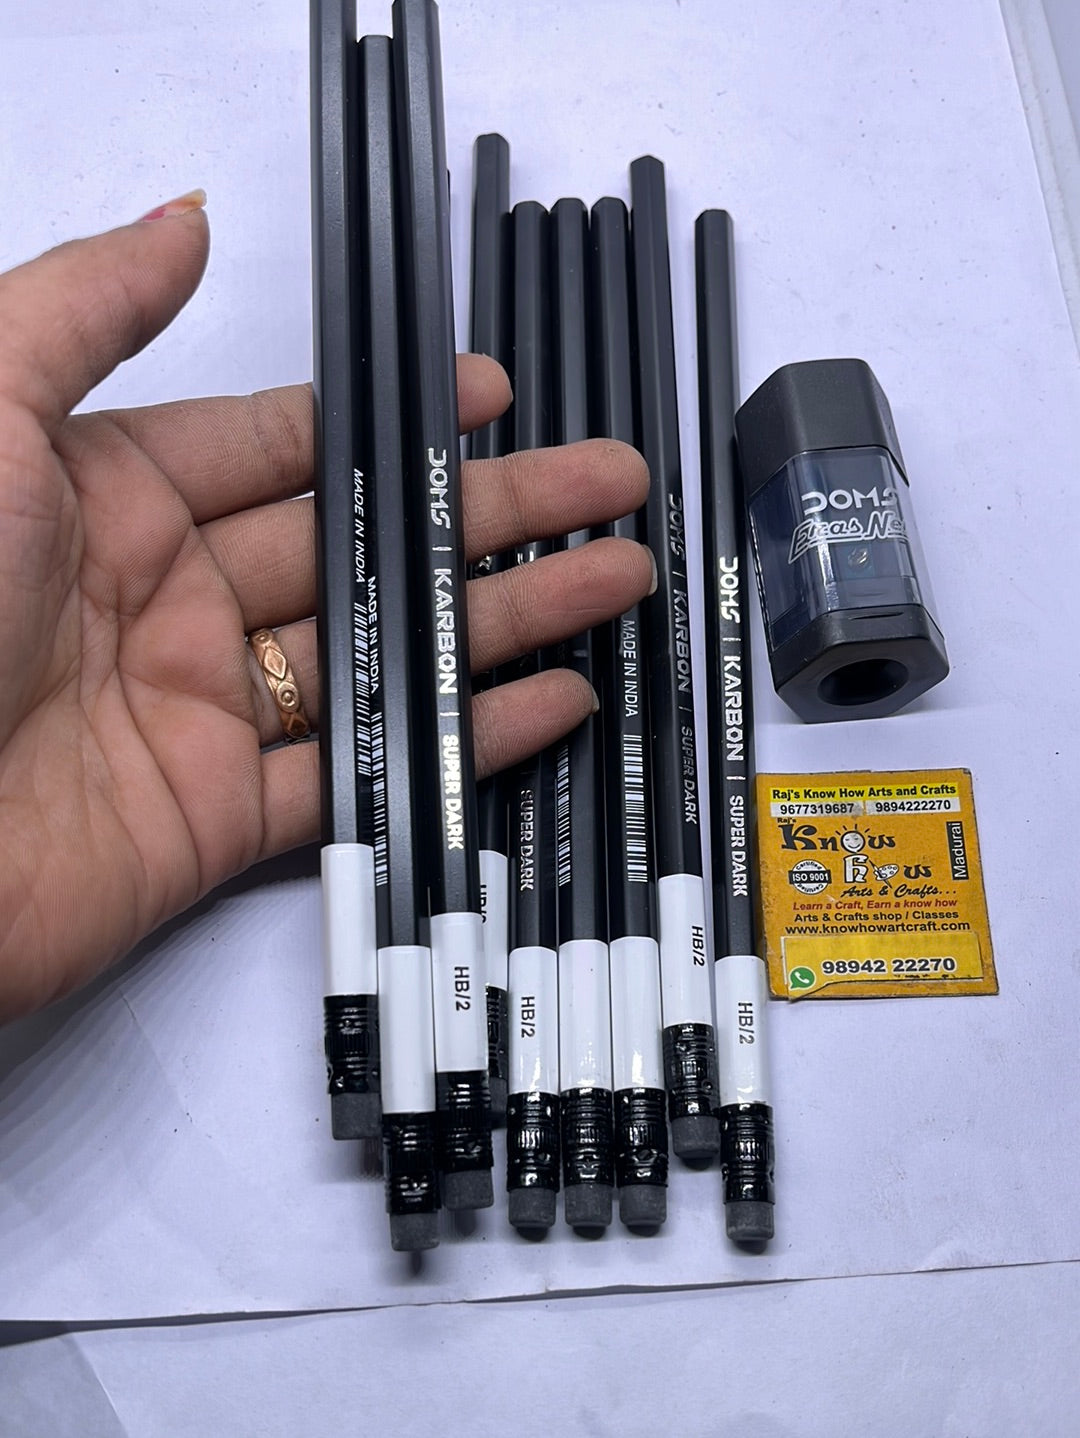 Super dark 10HB/2 graphite Doms 10 pencils + 1 Eraser free